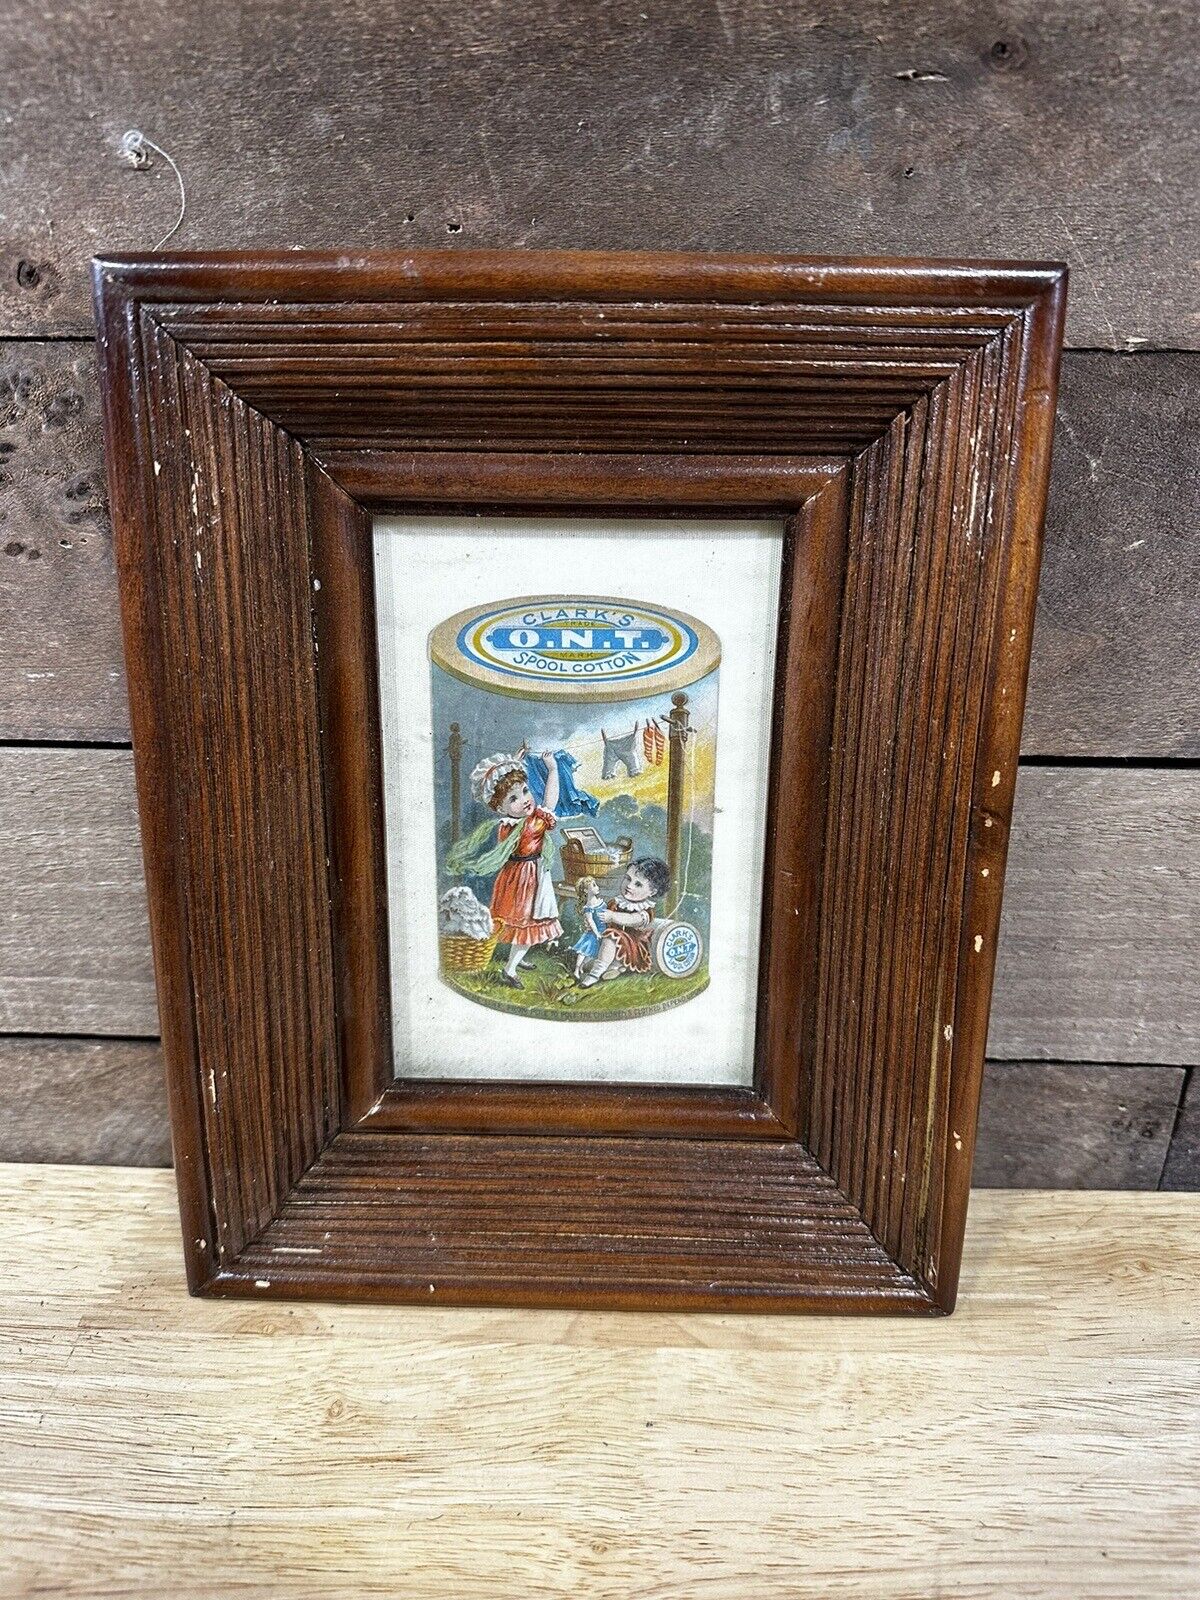 Vintage Wood Framed “Clark’s O.N.T. Spool Cotton” Advertisement Cabinet Card